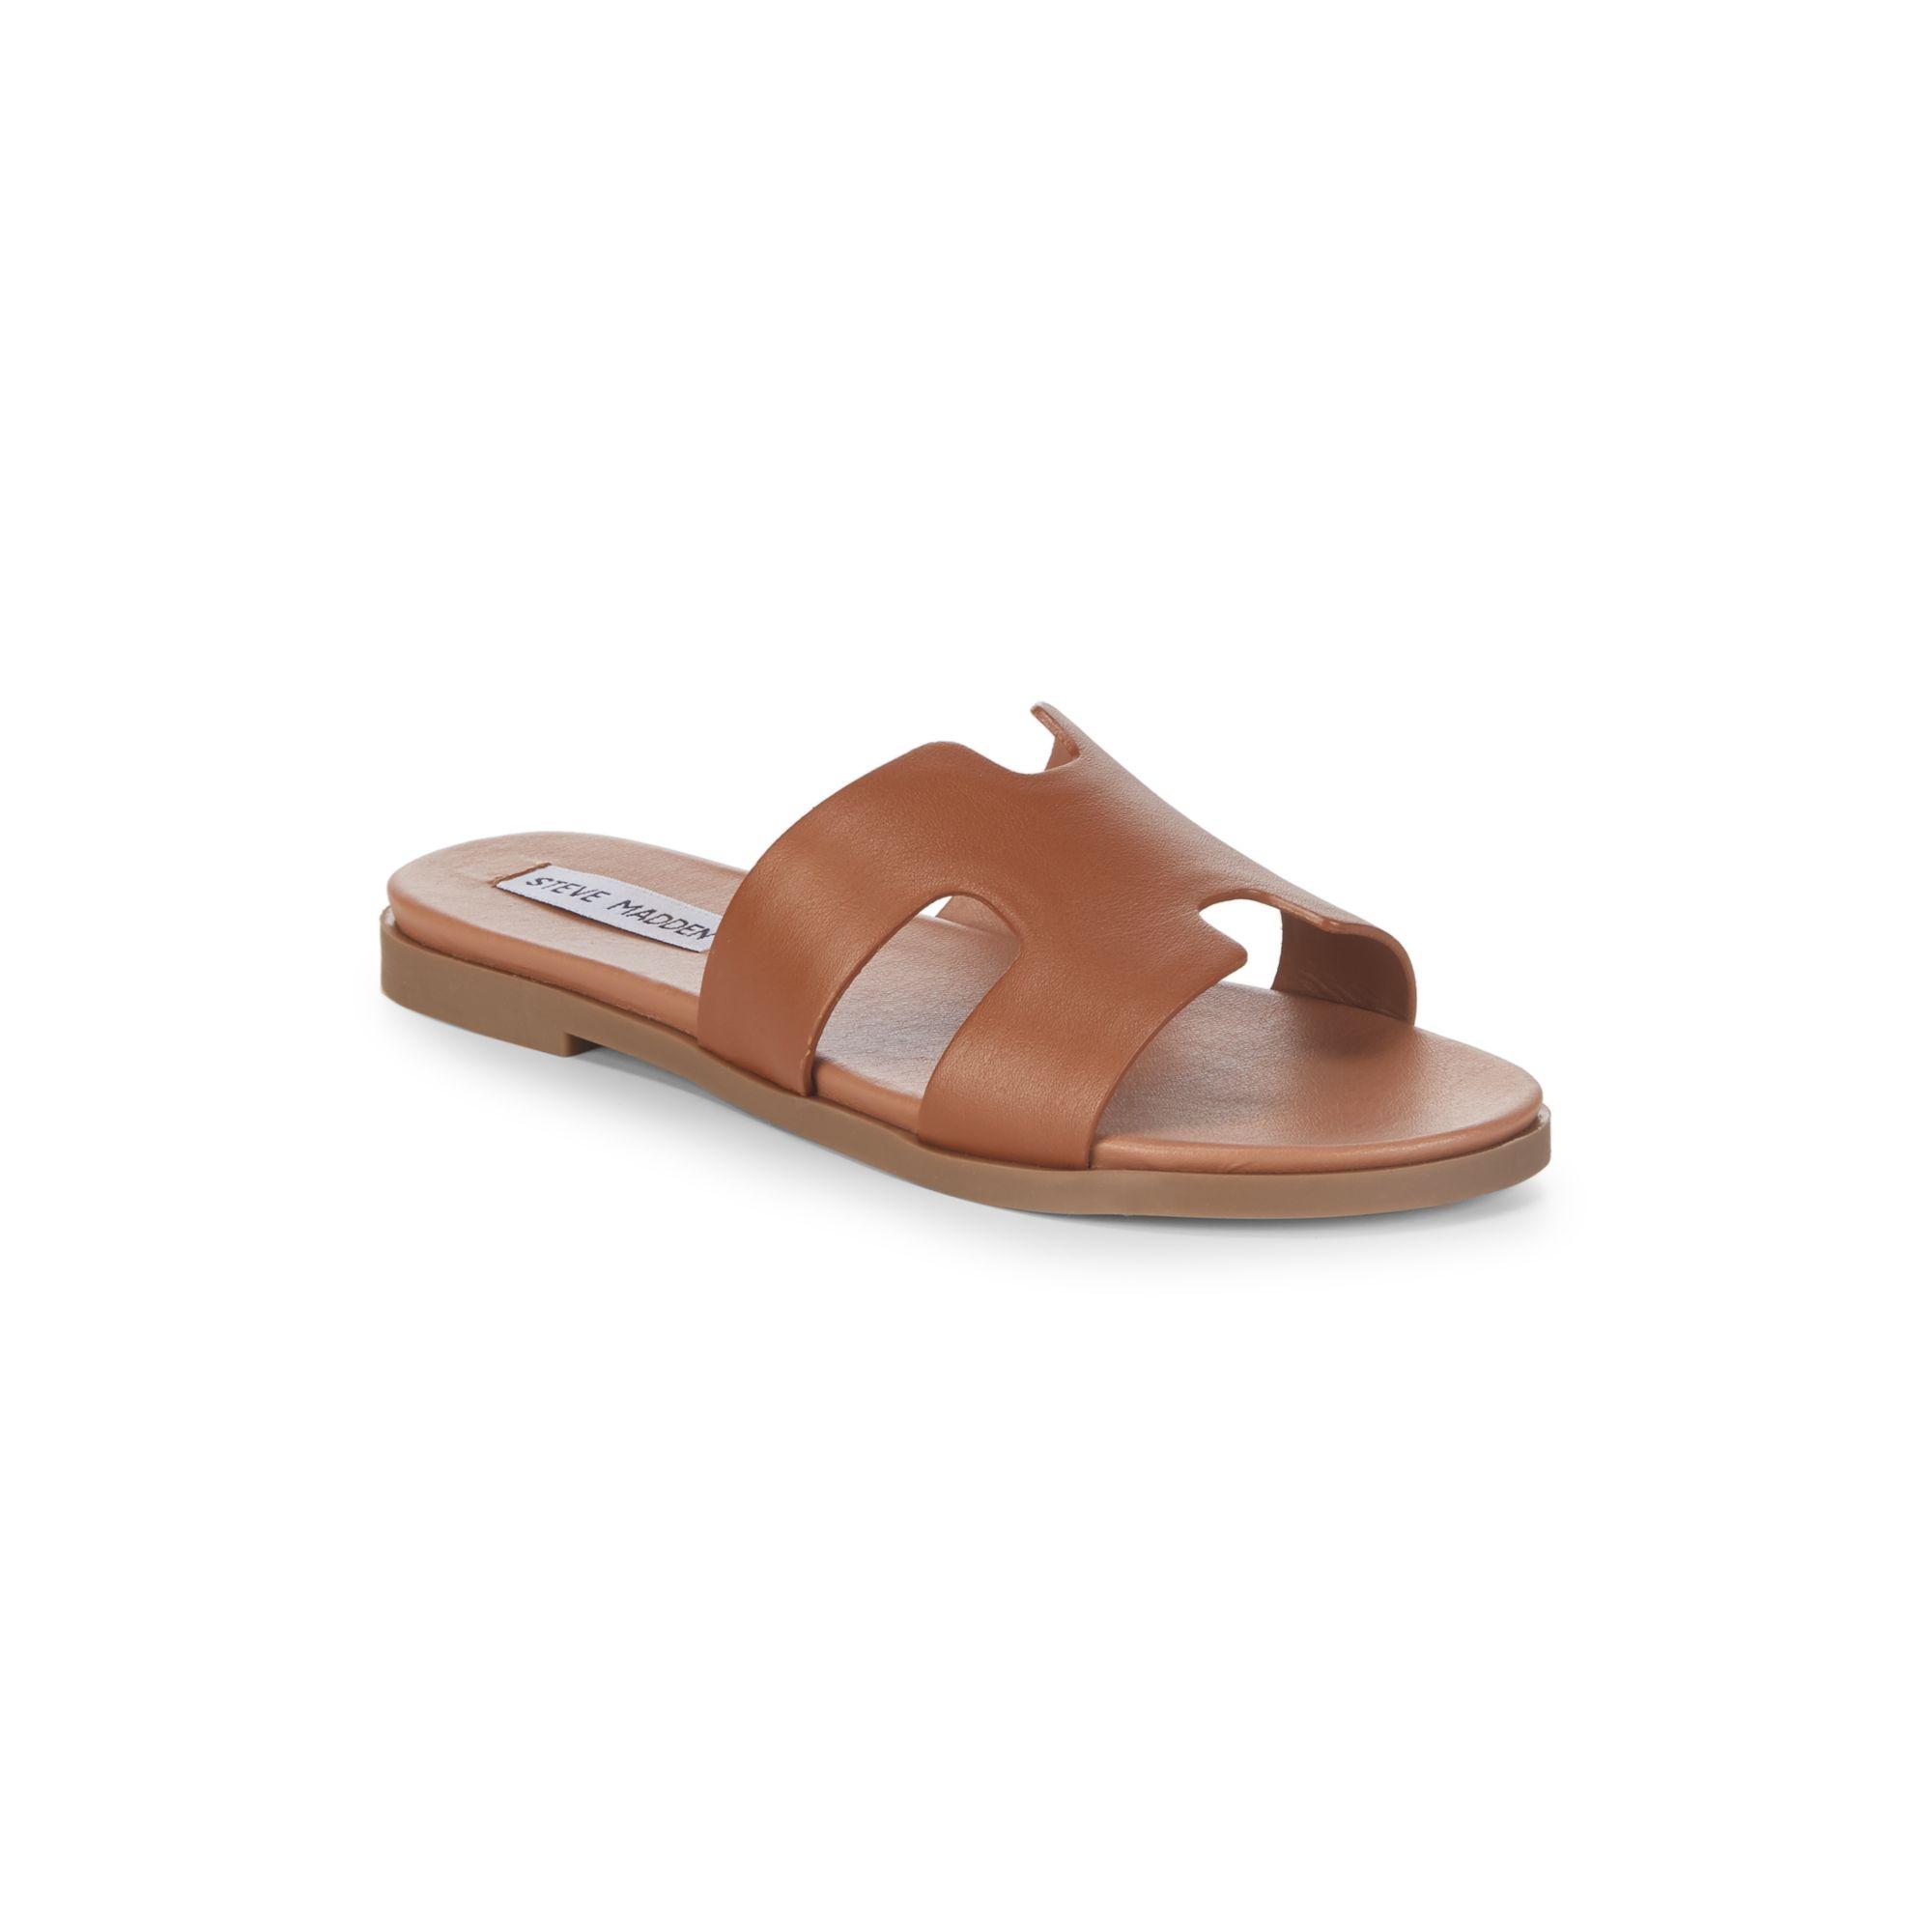 Steve Madden Dariella Leather Sandals in Brown | Lyst